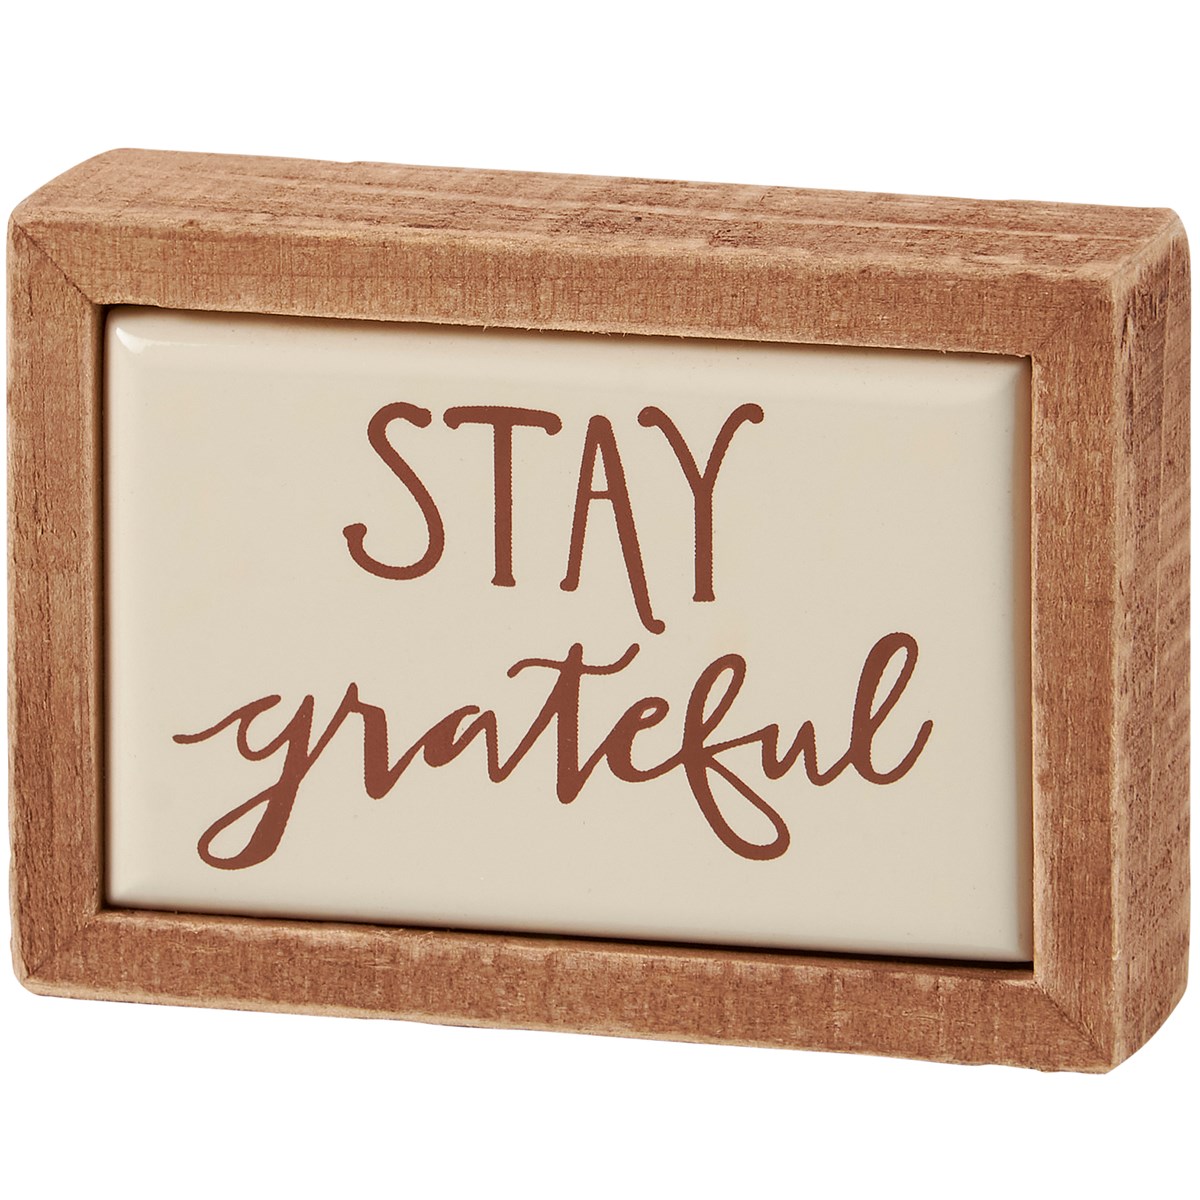 Stay Grateful Box Sign Mini - Wood